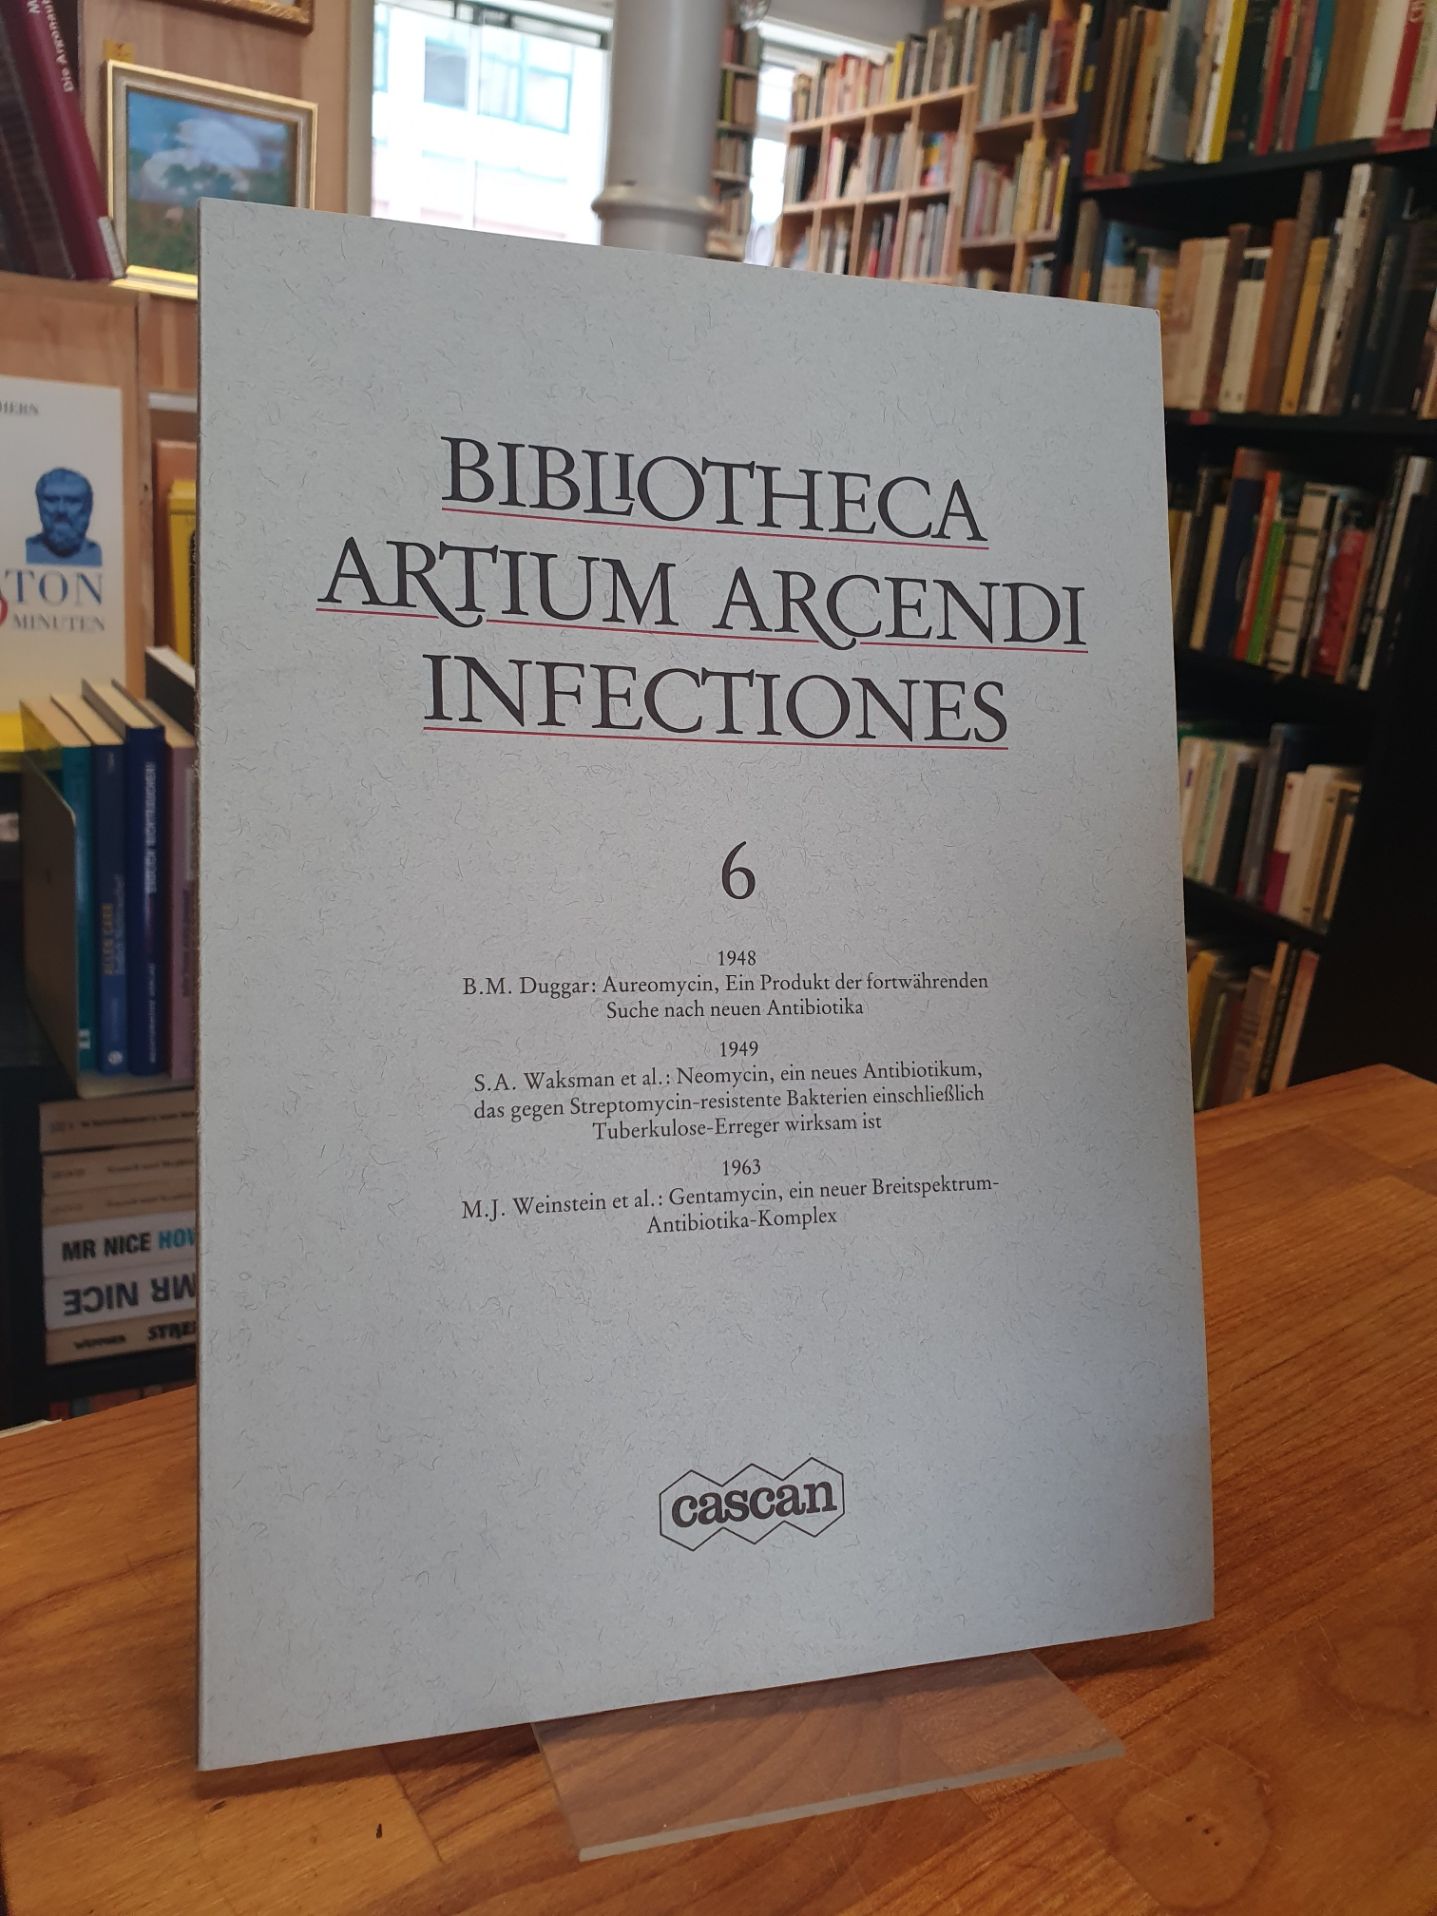 Duffar / Waksman / Weinstein et al., Bibliotheca Artium Arcendi Infectiones, Hef